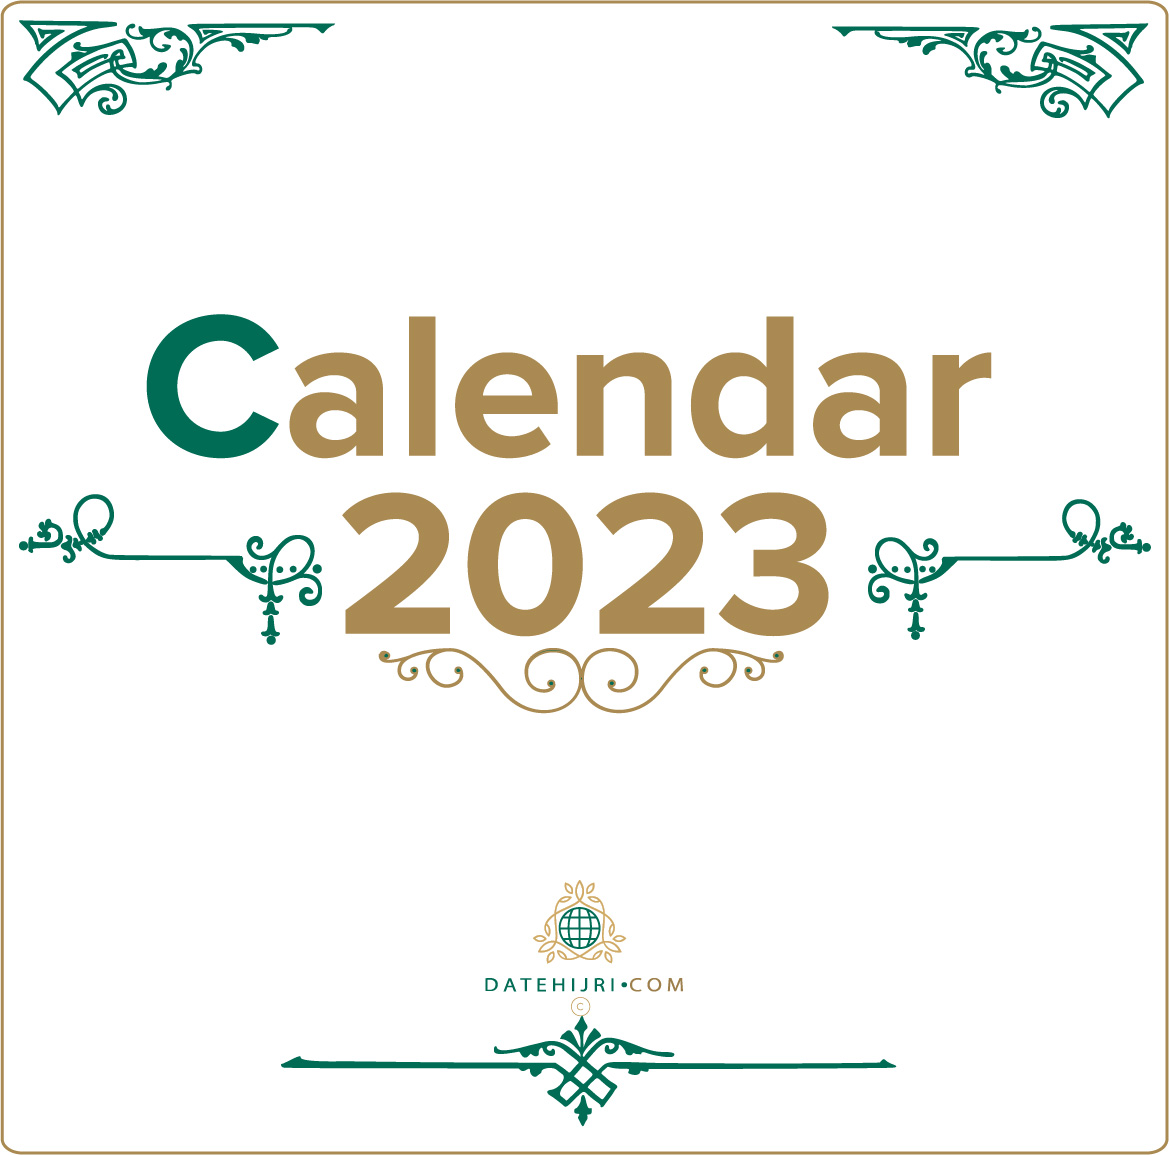 Miss Kobayashi's Dragon Maid Calendar 2022-2023: OFFICIAL 2022 Calendar -  Anime Manga Calendar 2022-2023, Calendar Planner - Kalendar calendario ...  Supplies) - January 2022 to December 2024 by Cuthbert Azaria | Goodreads